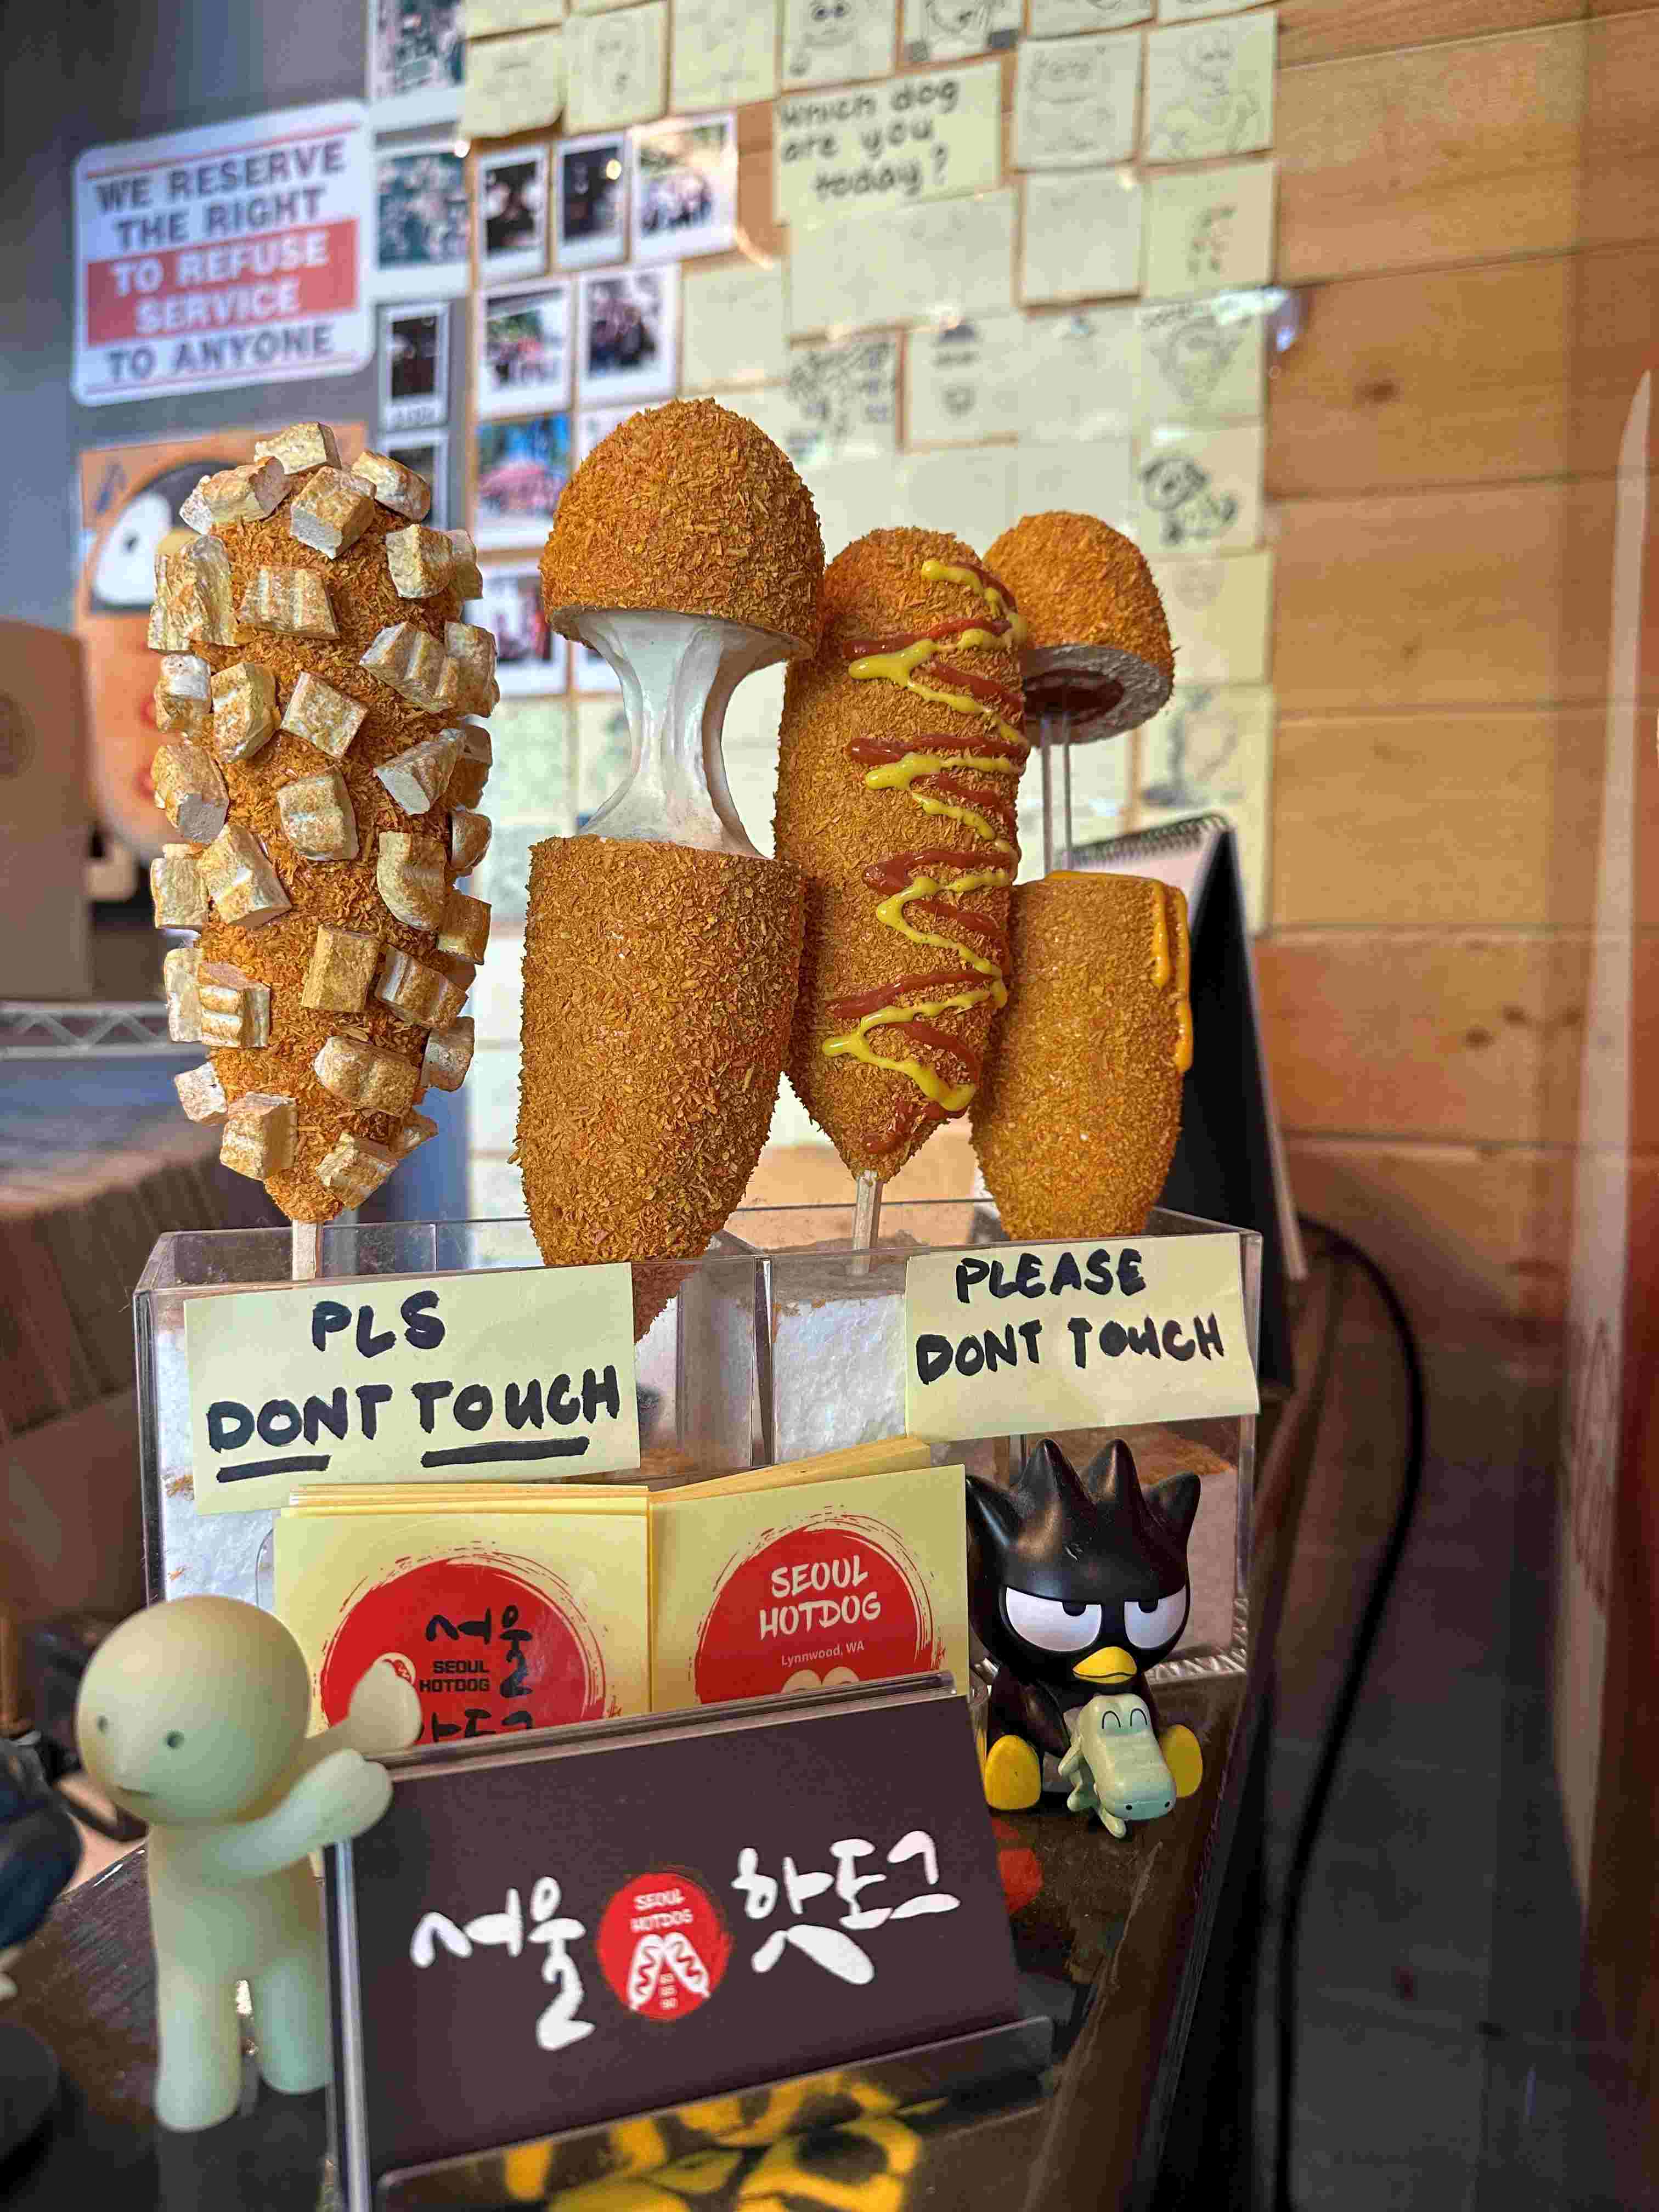 Display at Seoul HotDog showcasing different Korean hot dogs